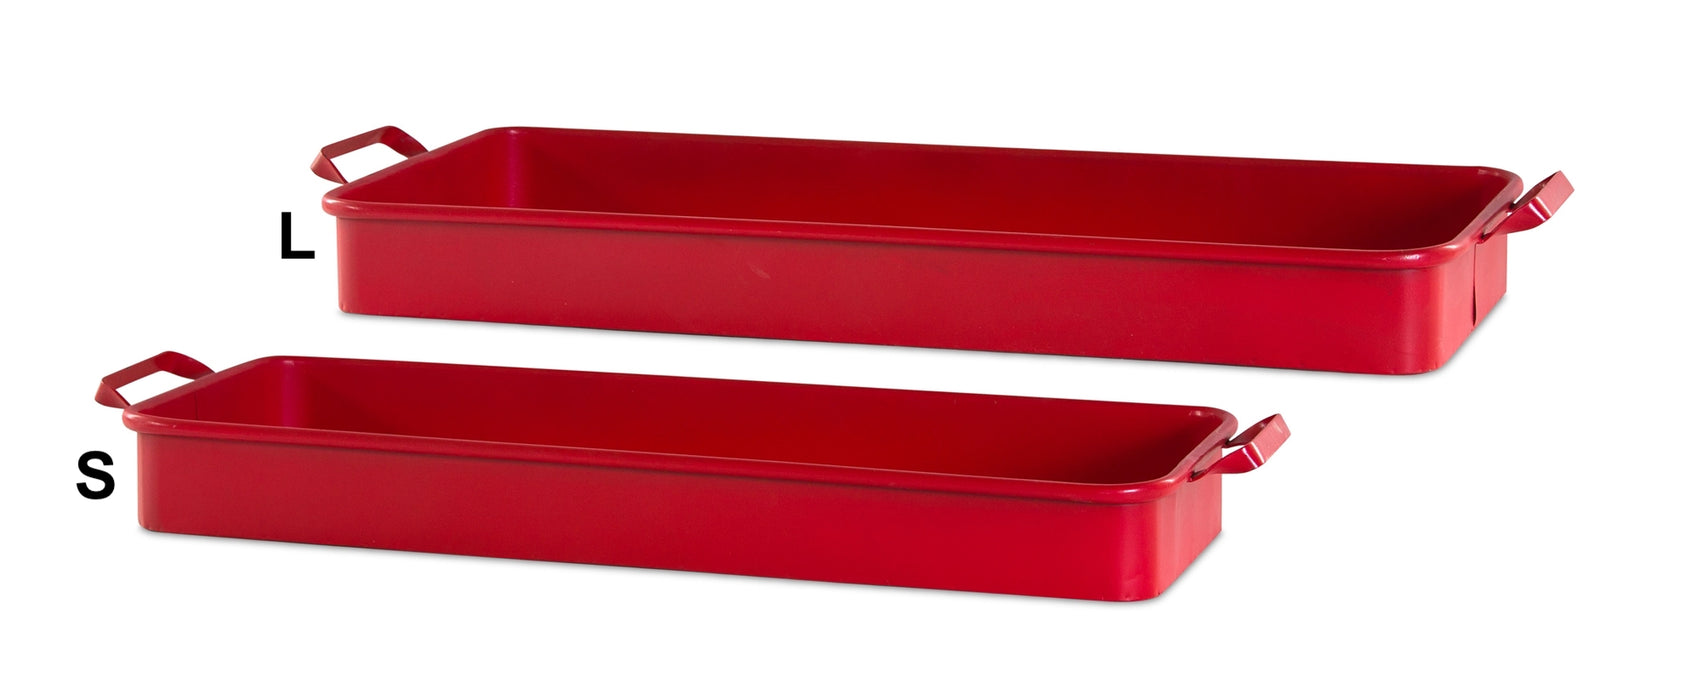 Red Iron Tray - 2 Sizes